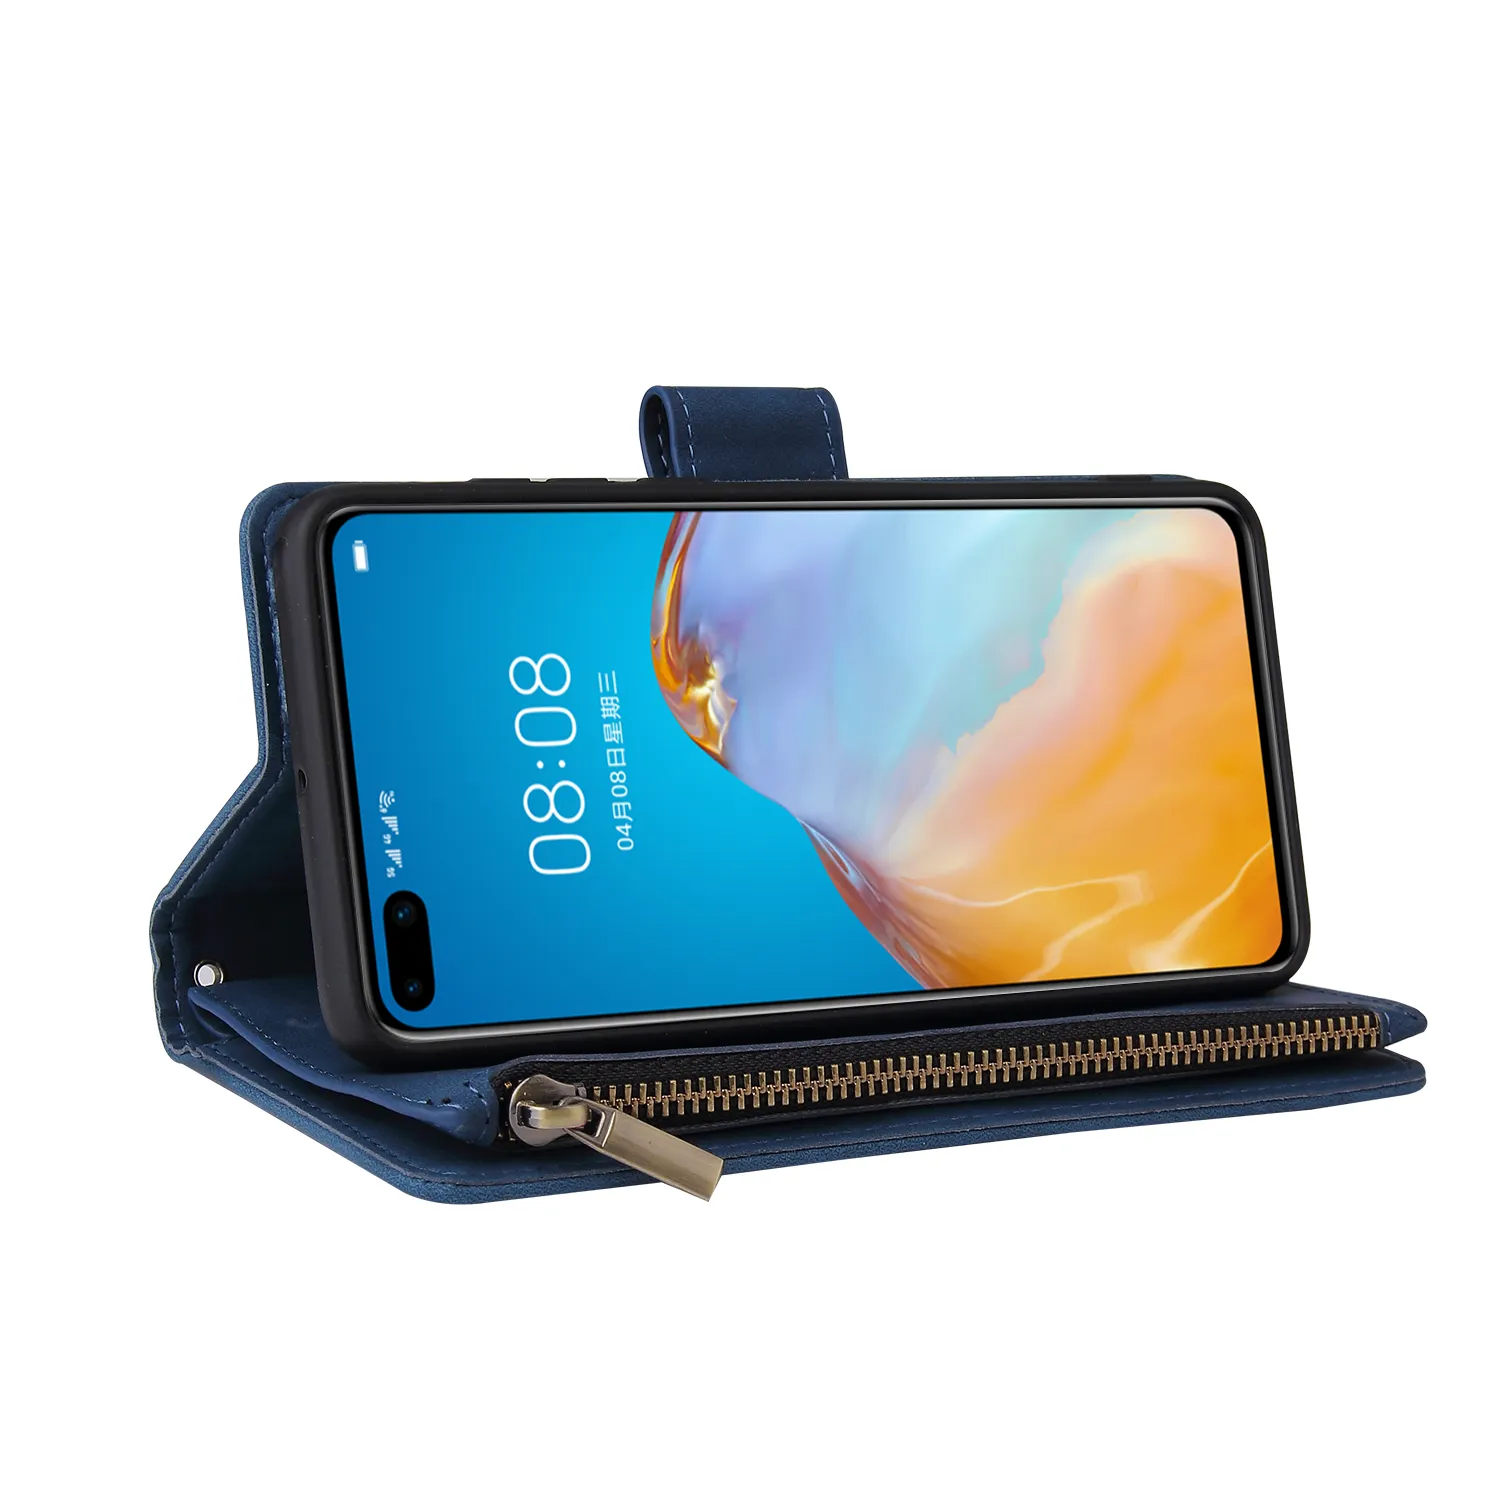 Huawei P40 P30 Pro P20 Lite P Smart Plus 2019 Honor 10 Lite 20i 20 Pro Mate 30 Lite Pro Wallet Flip Phone Cover